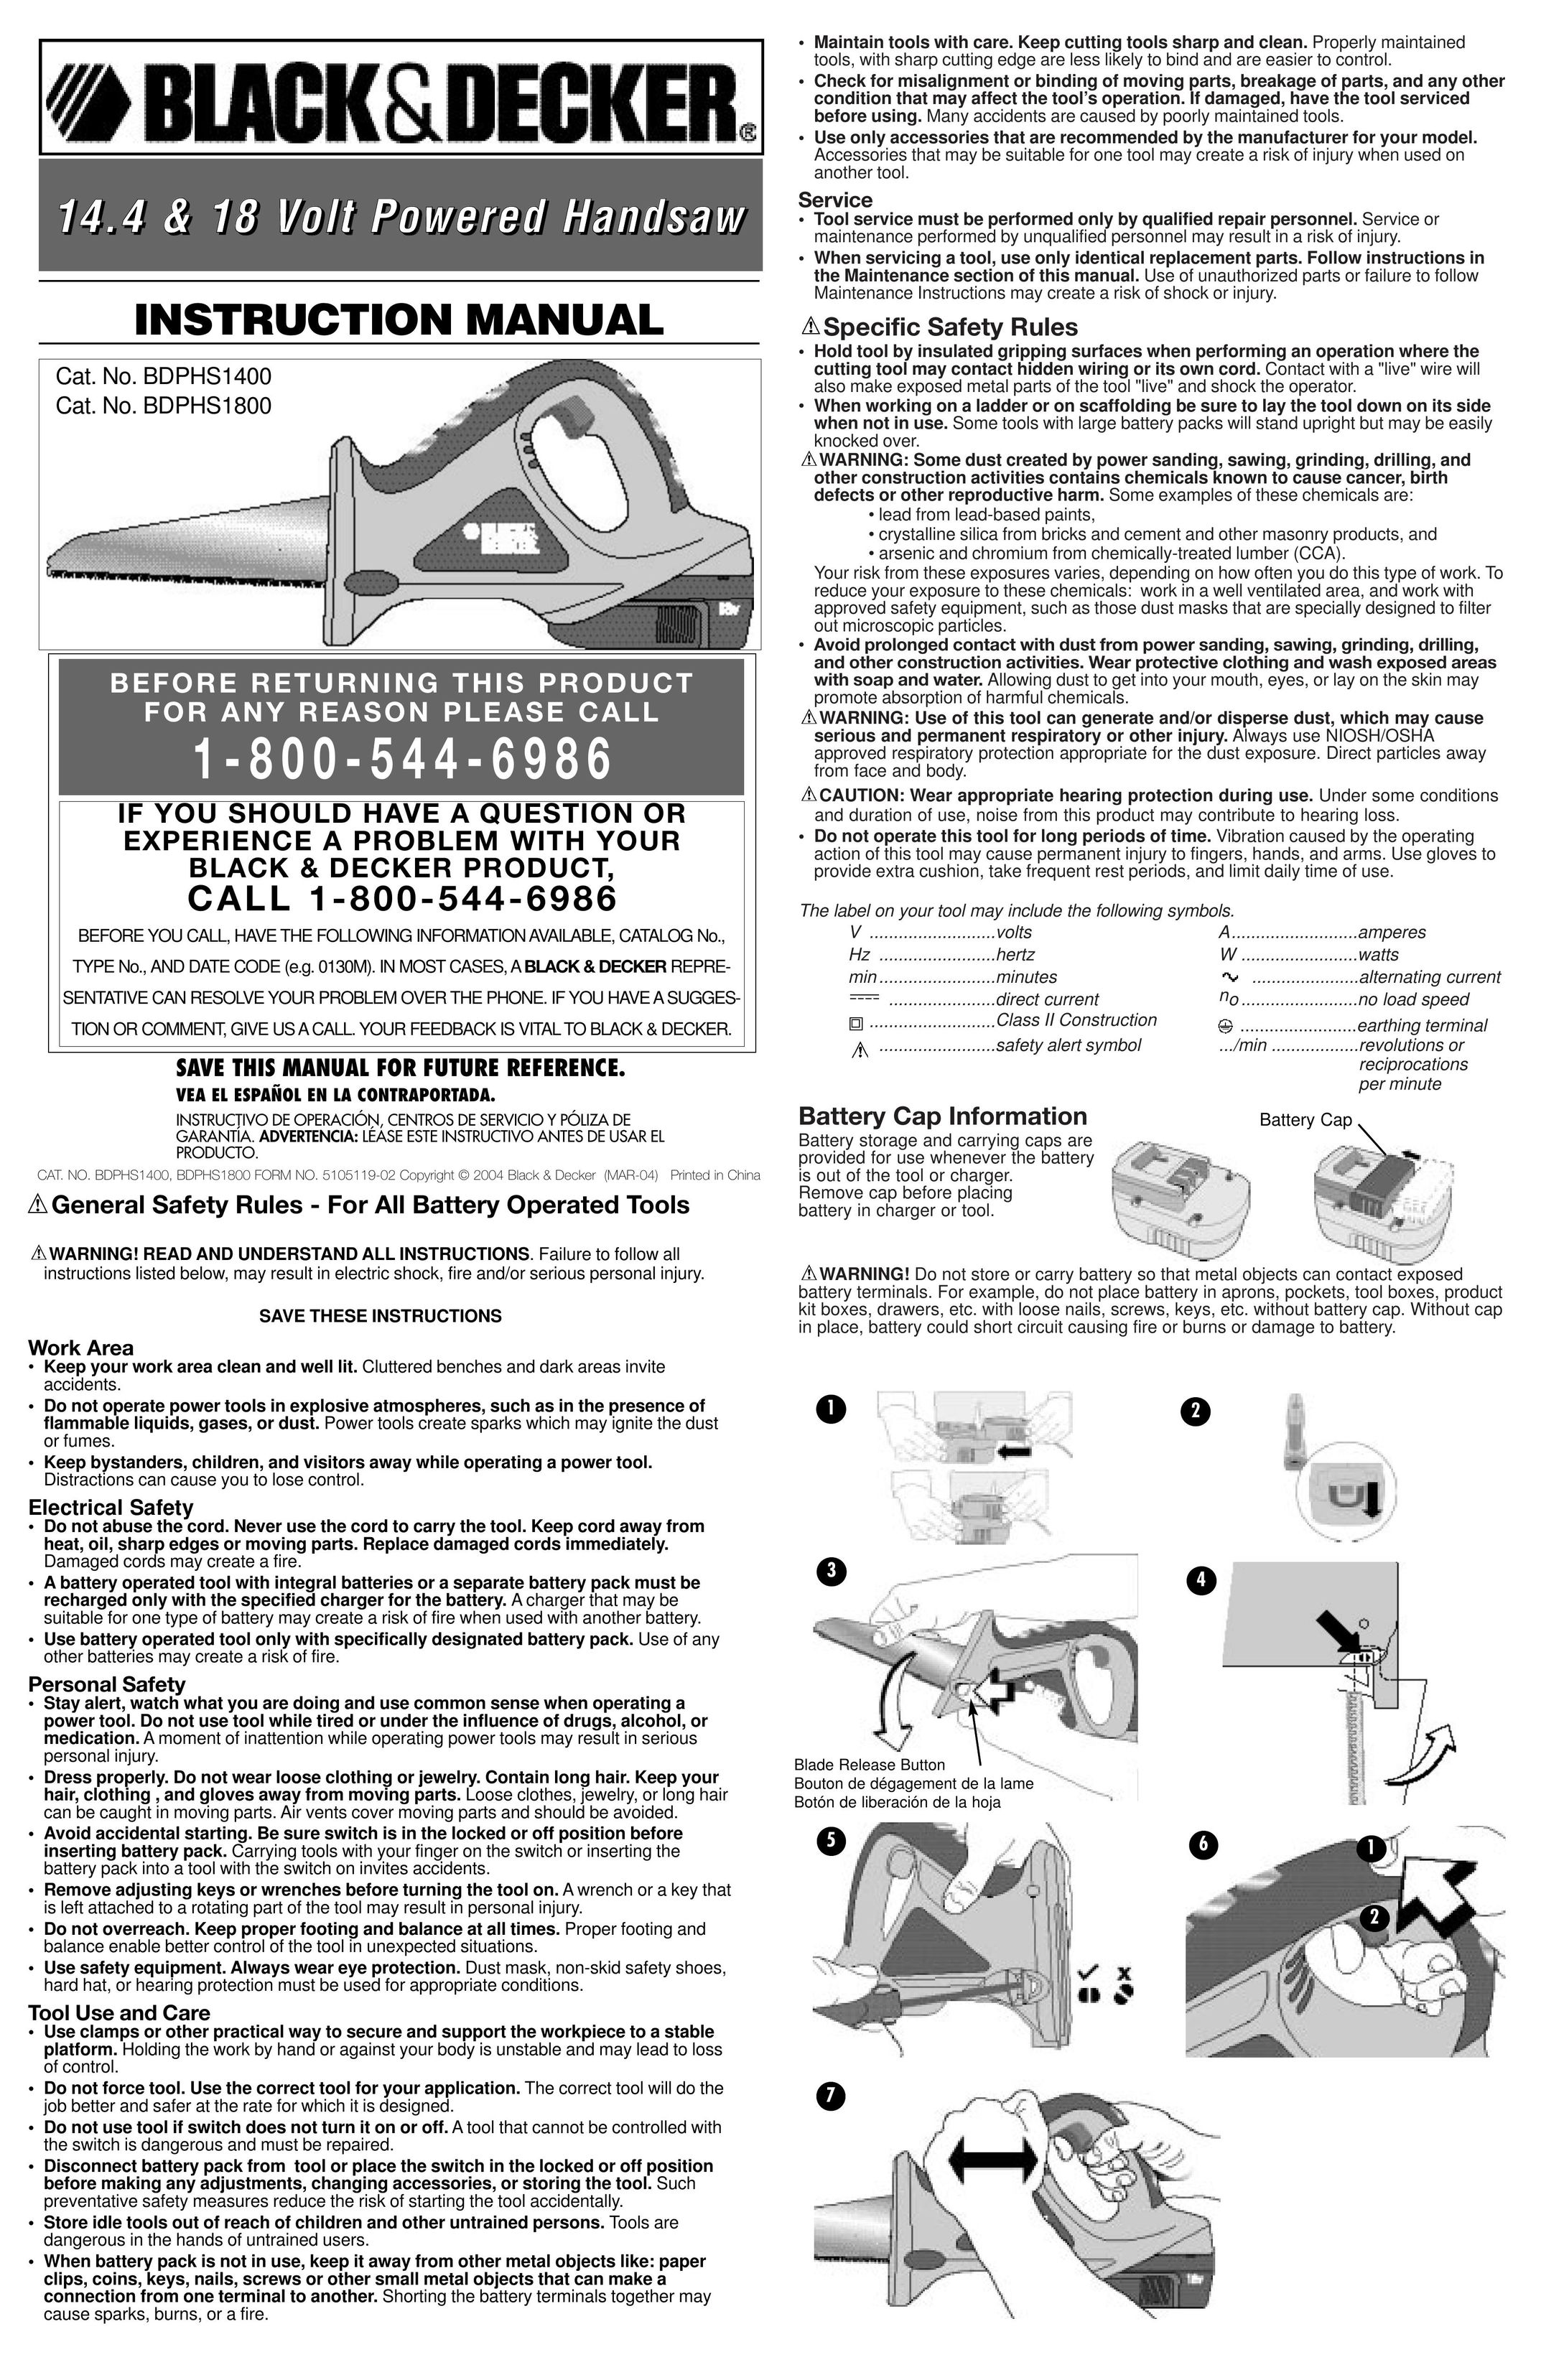 Black & Decker 5105119-02 Saw User Manual